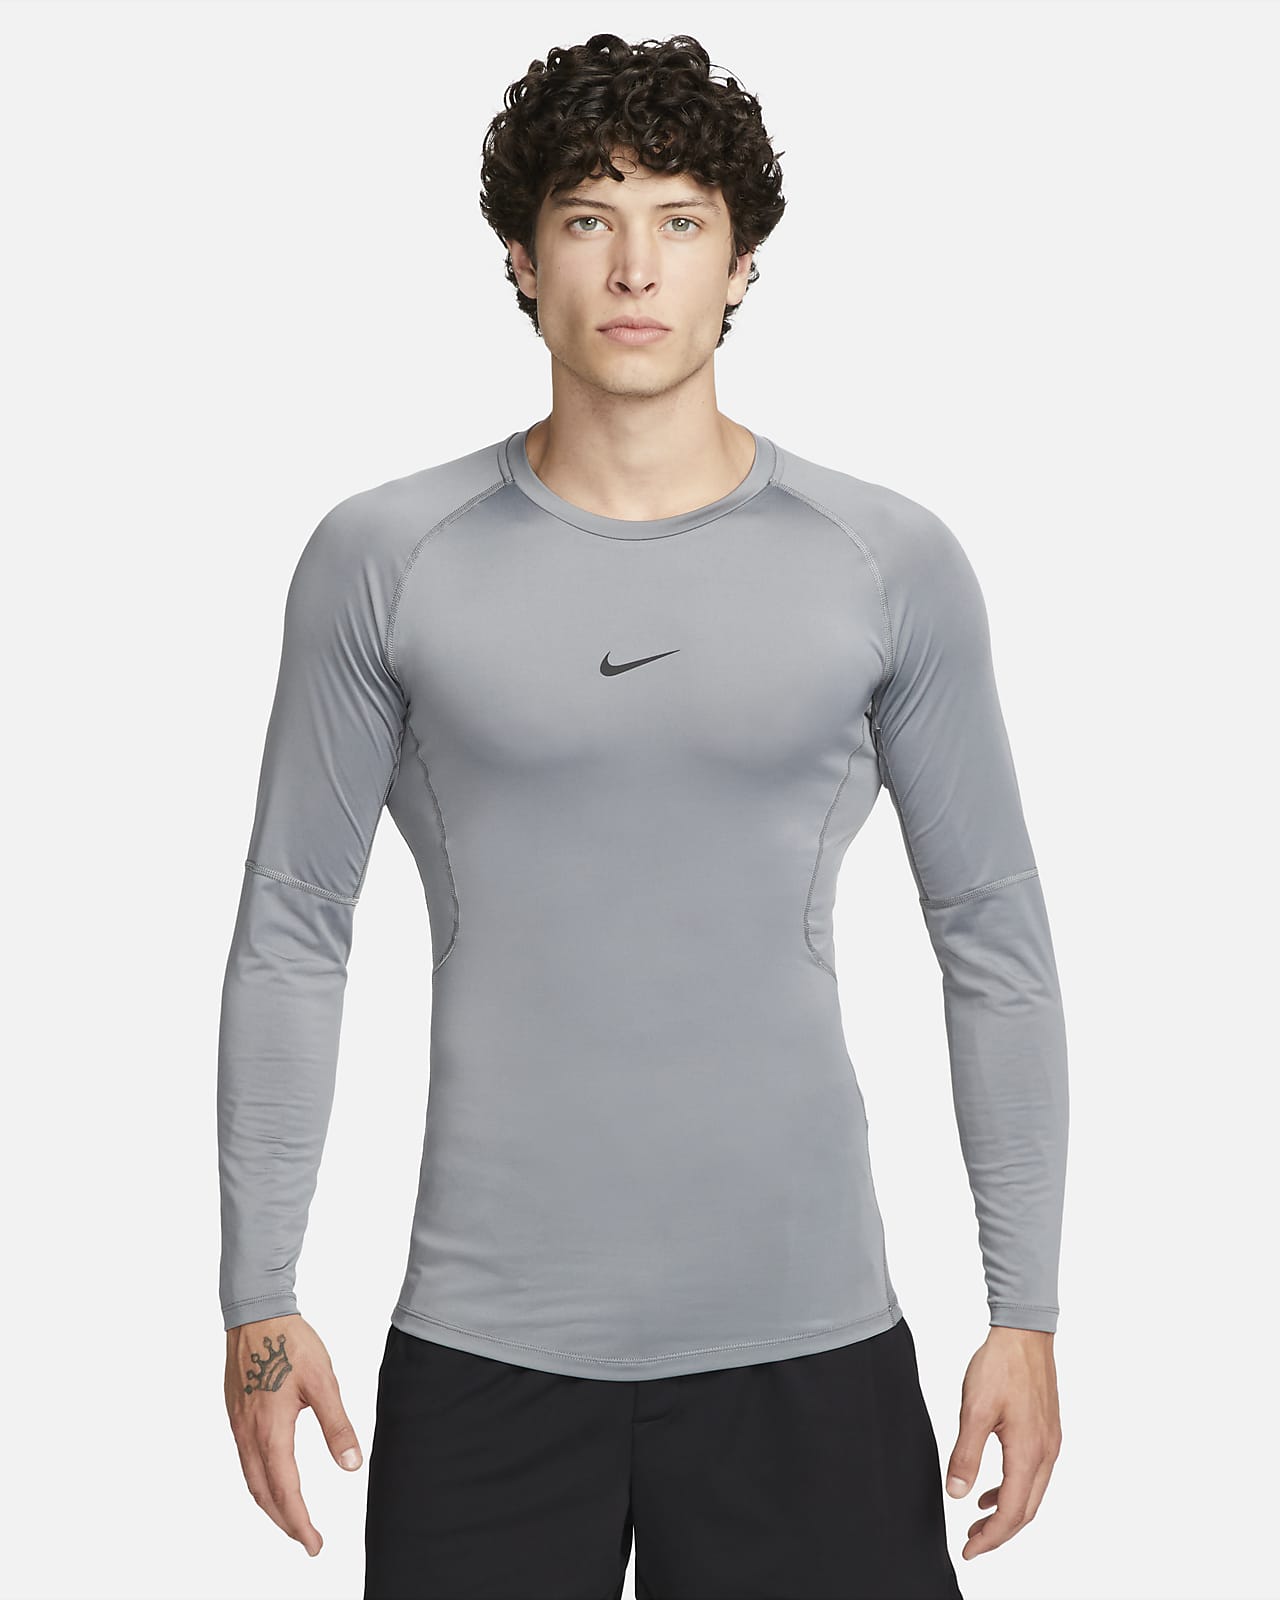 Nike Men's Tight Long-Sleeve Fitness Top. Nike.com